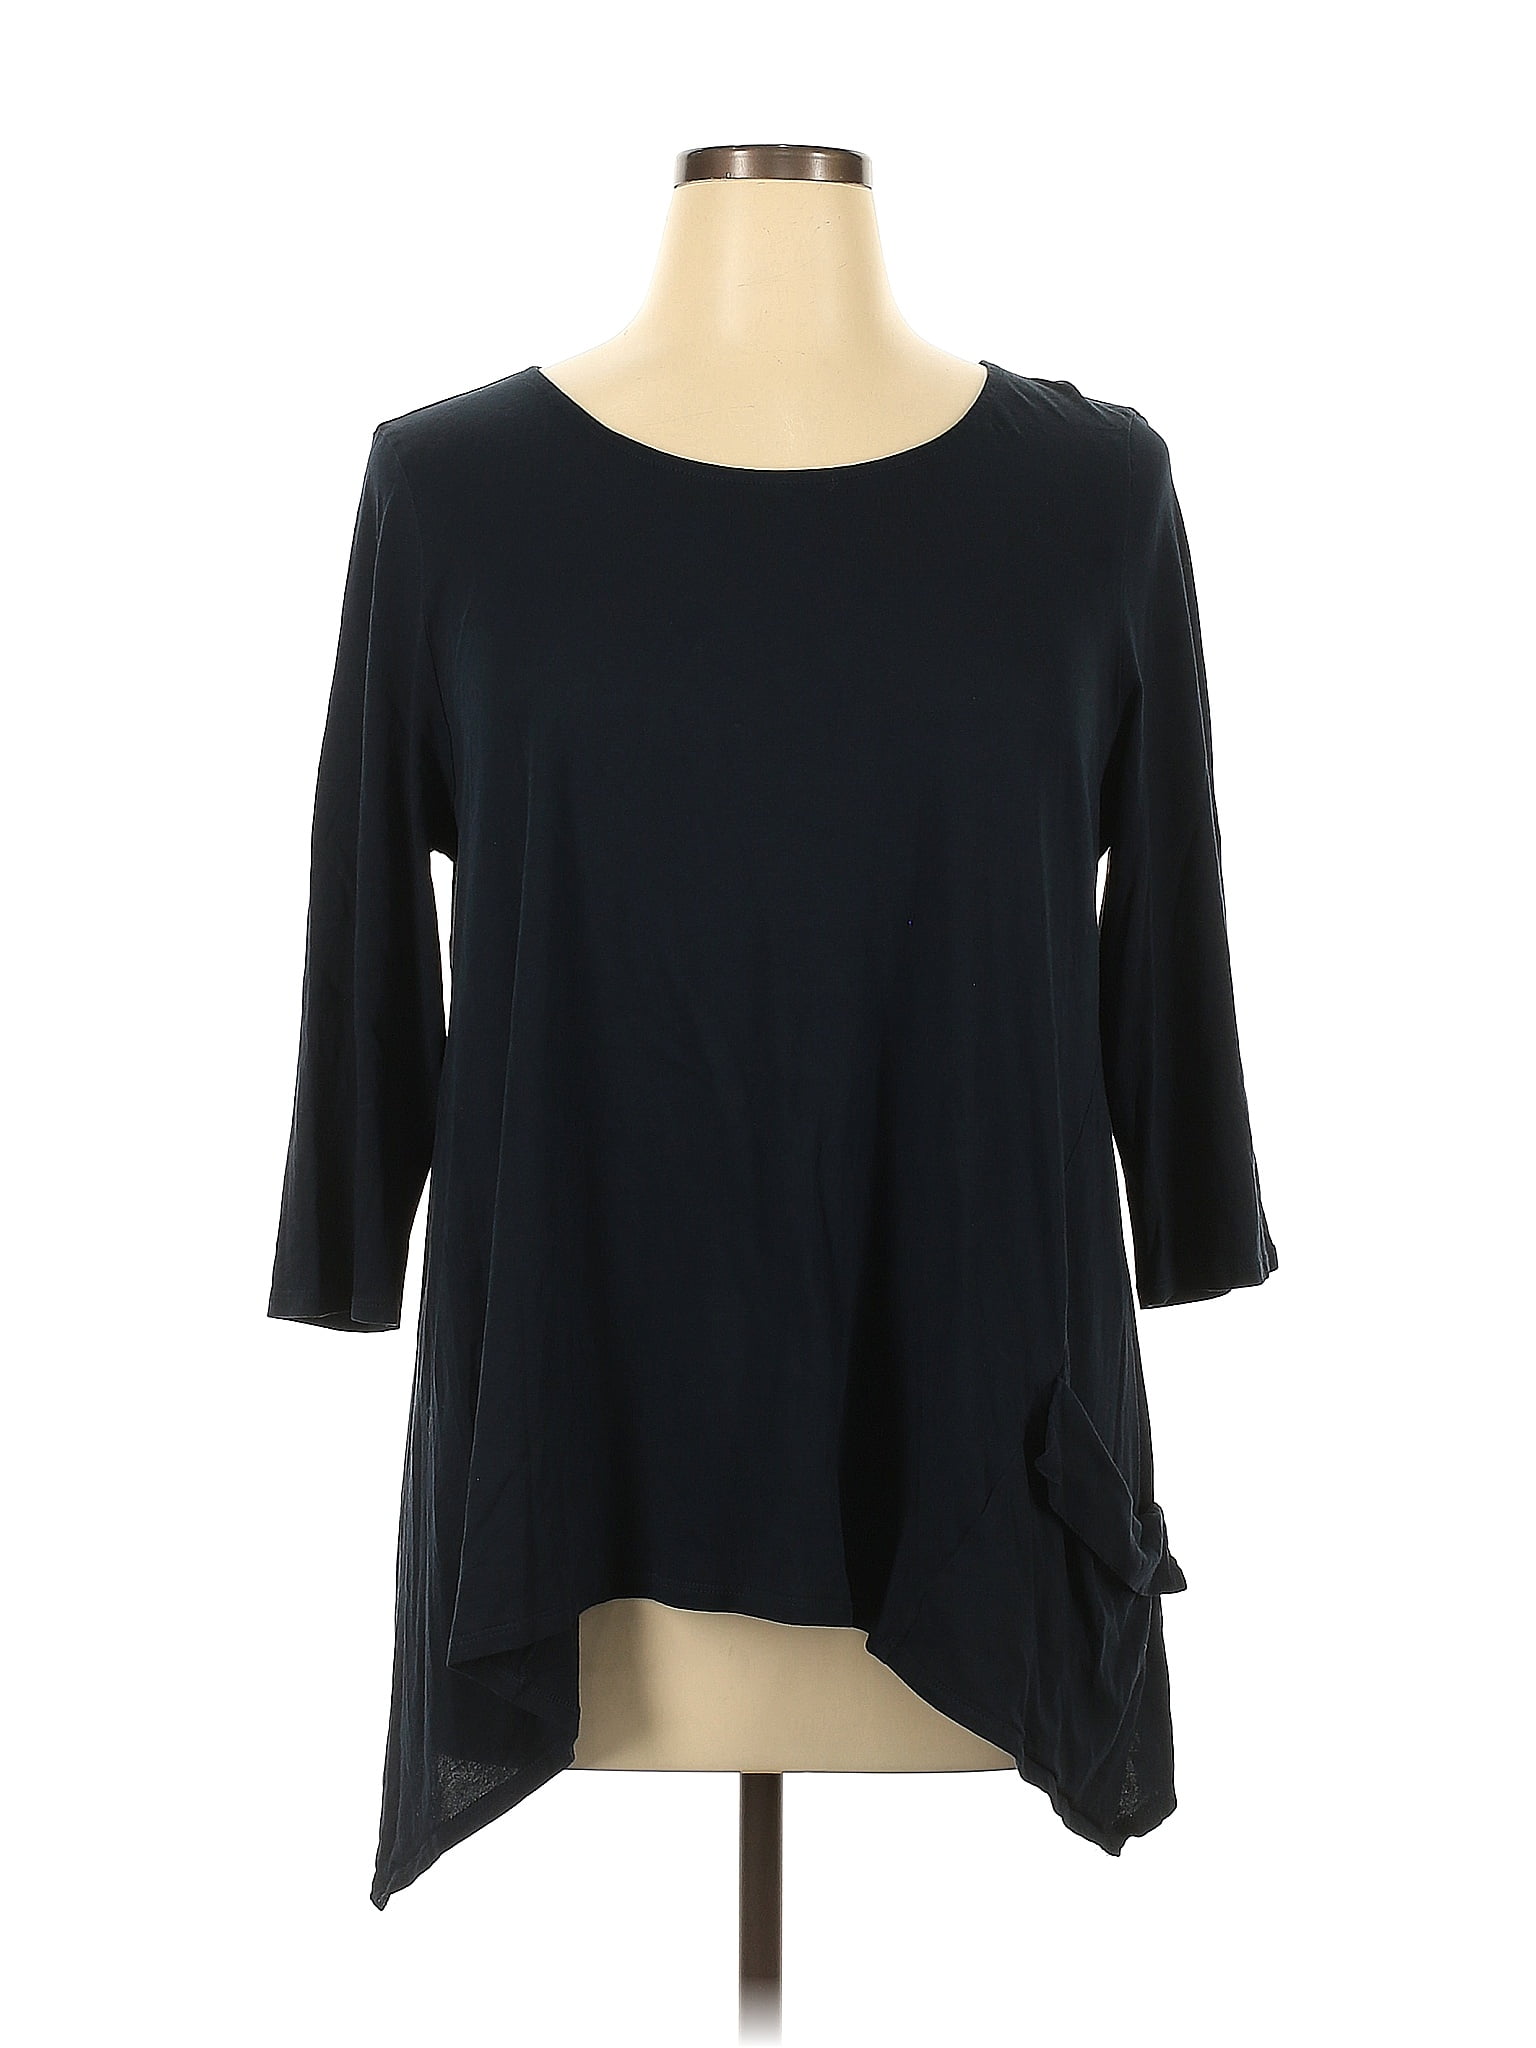 Purejill Solid Teal Black 3/4 Sleeve T-Shirt Size XL - 48% off | ThredUp